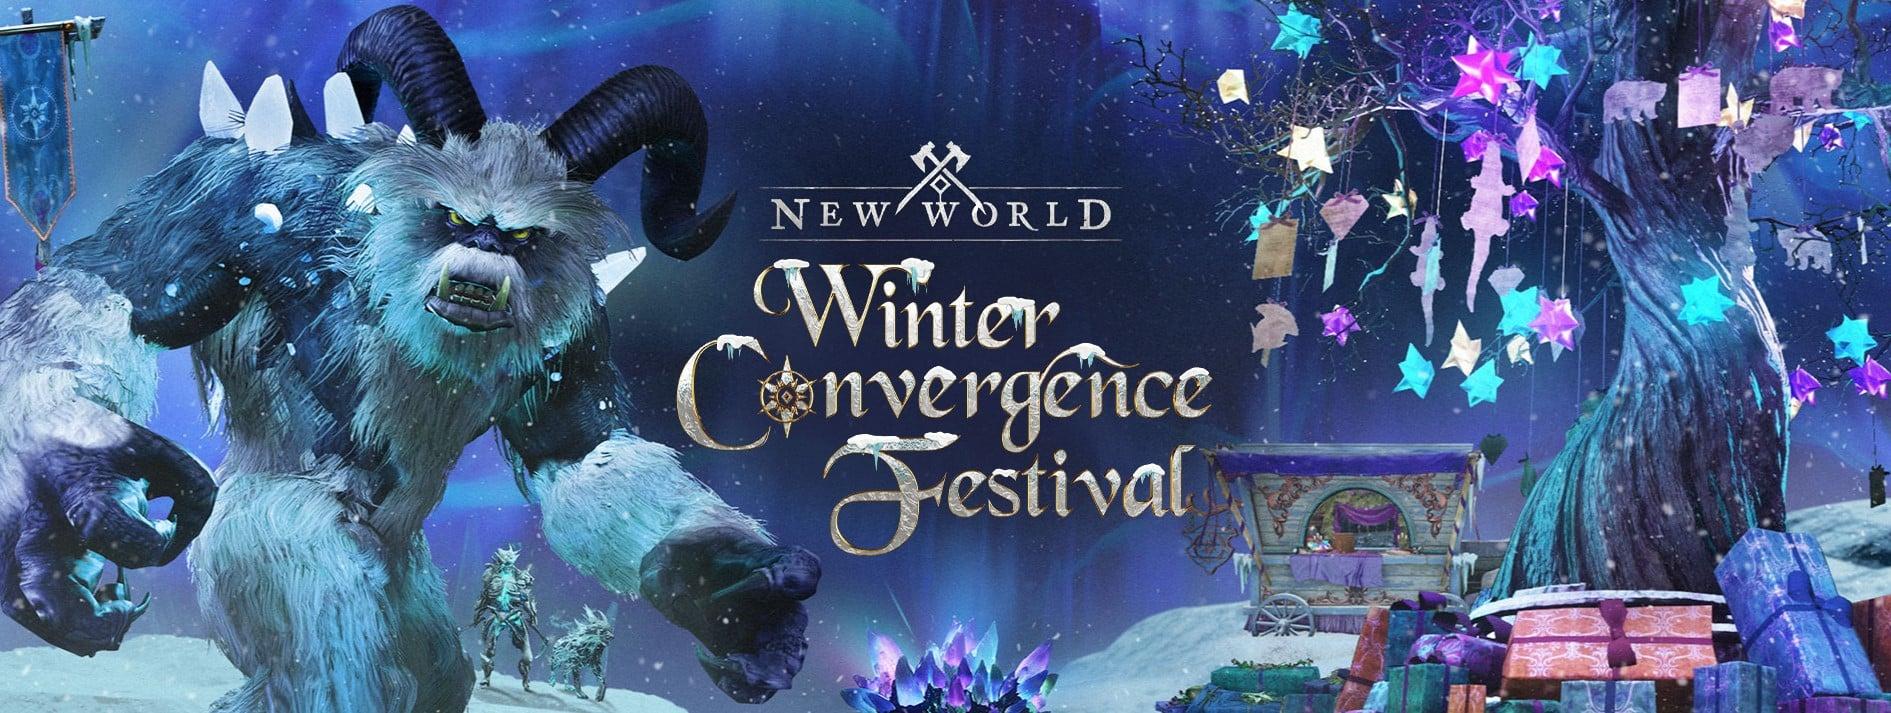 new world winter event